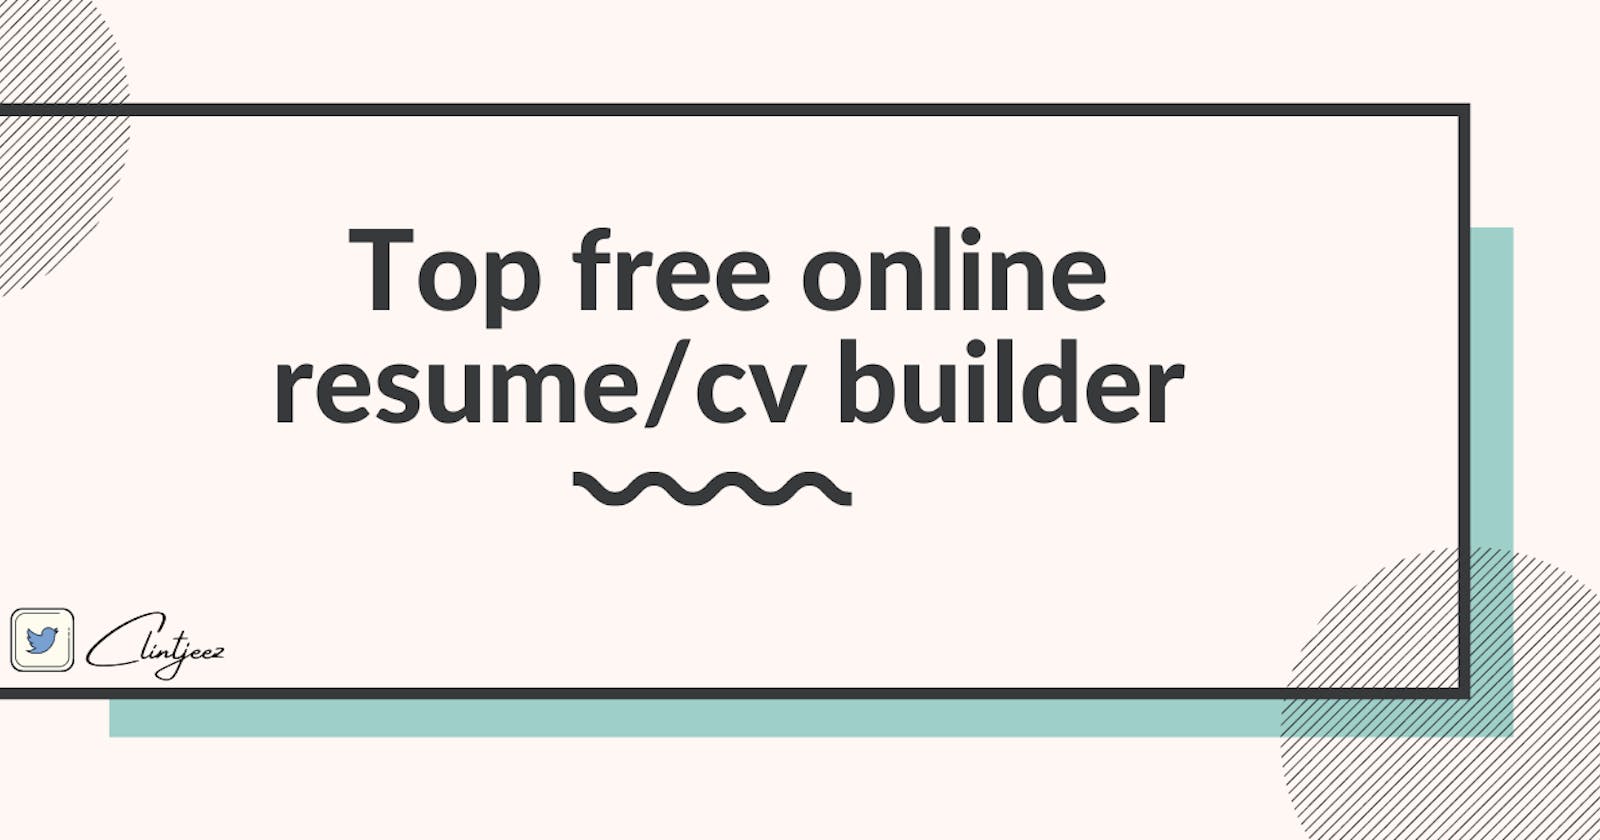 Top free online resume/cv builder